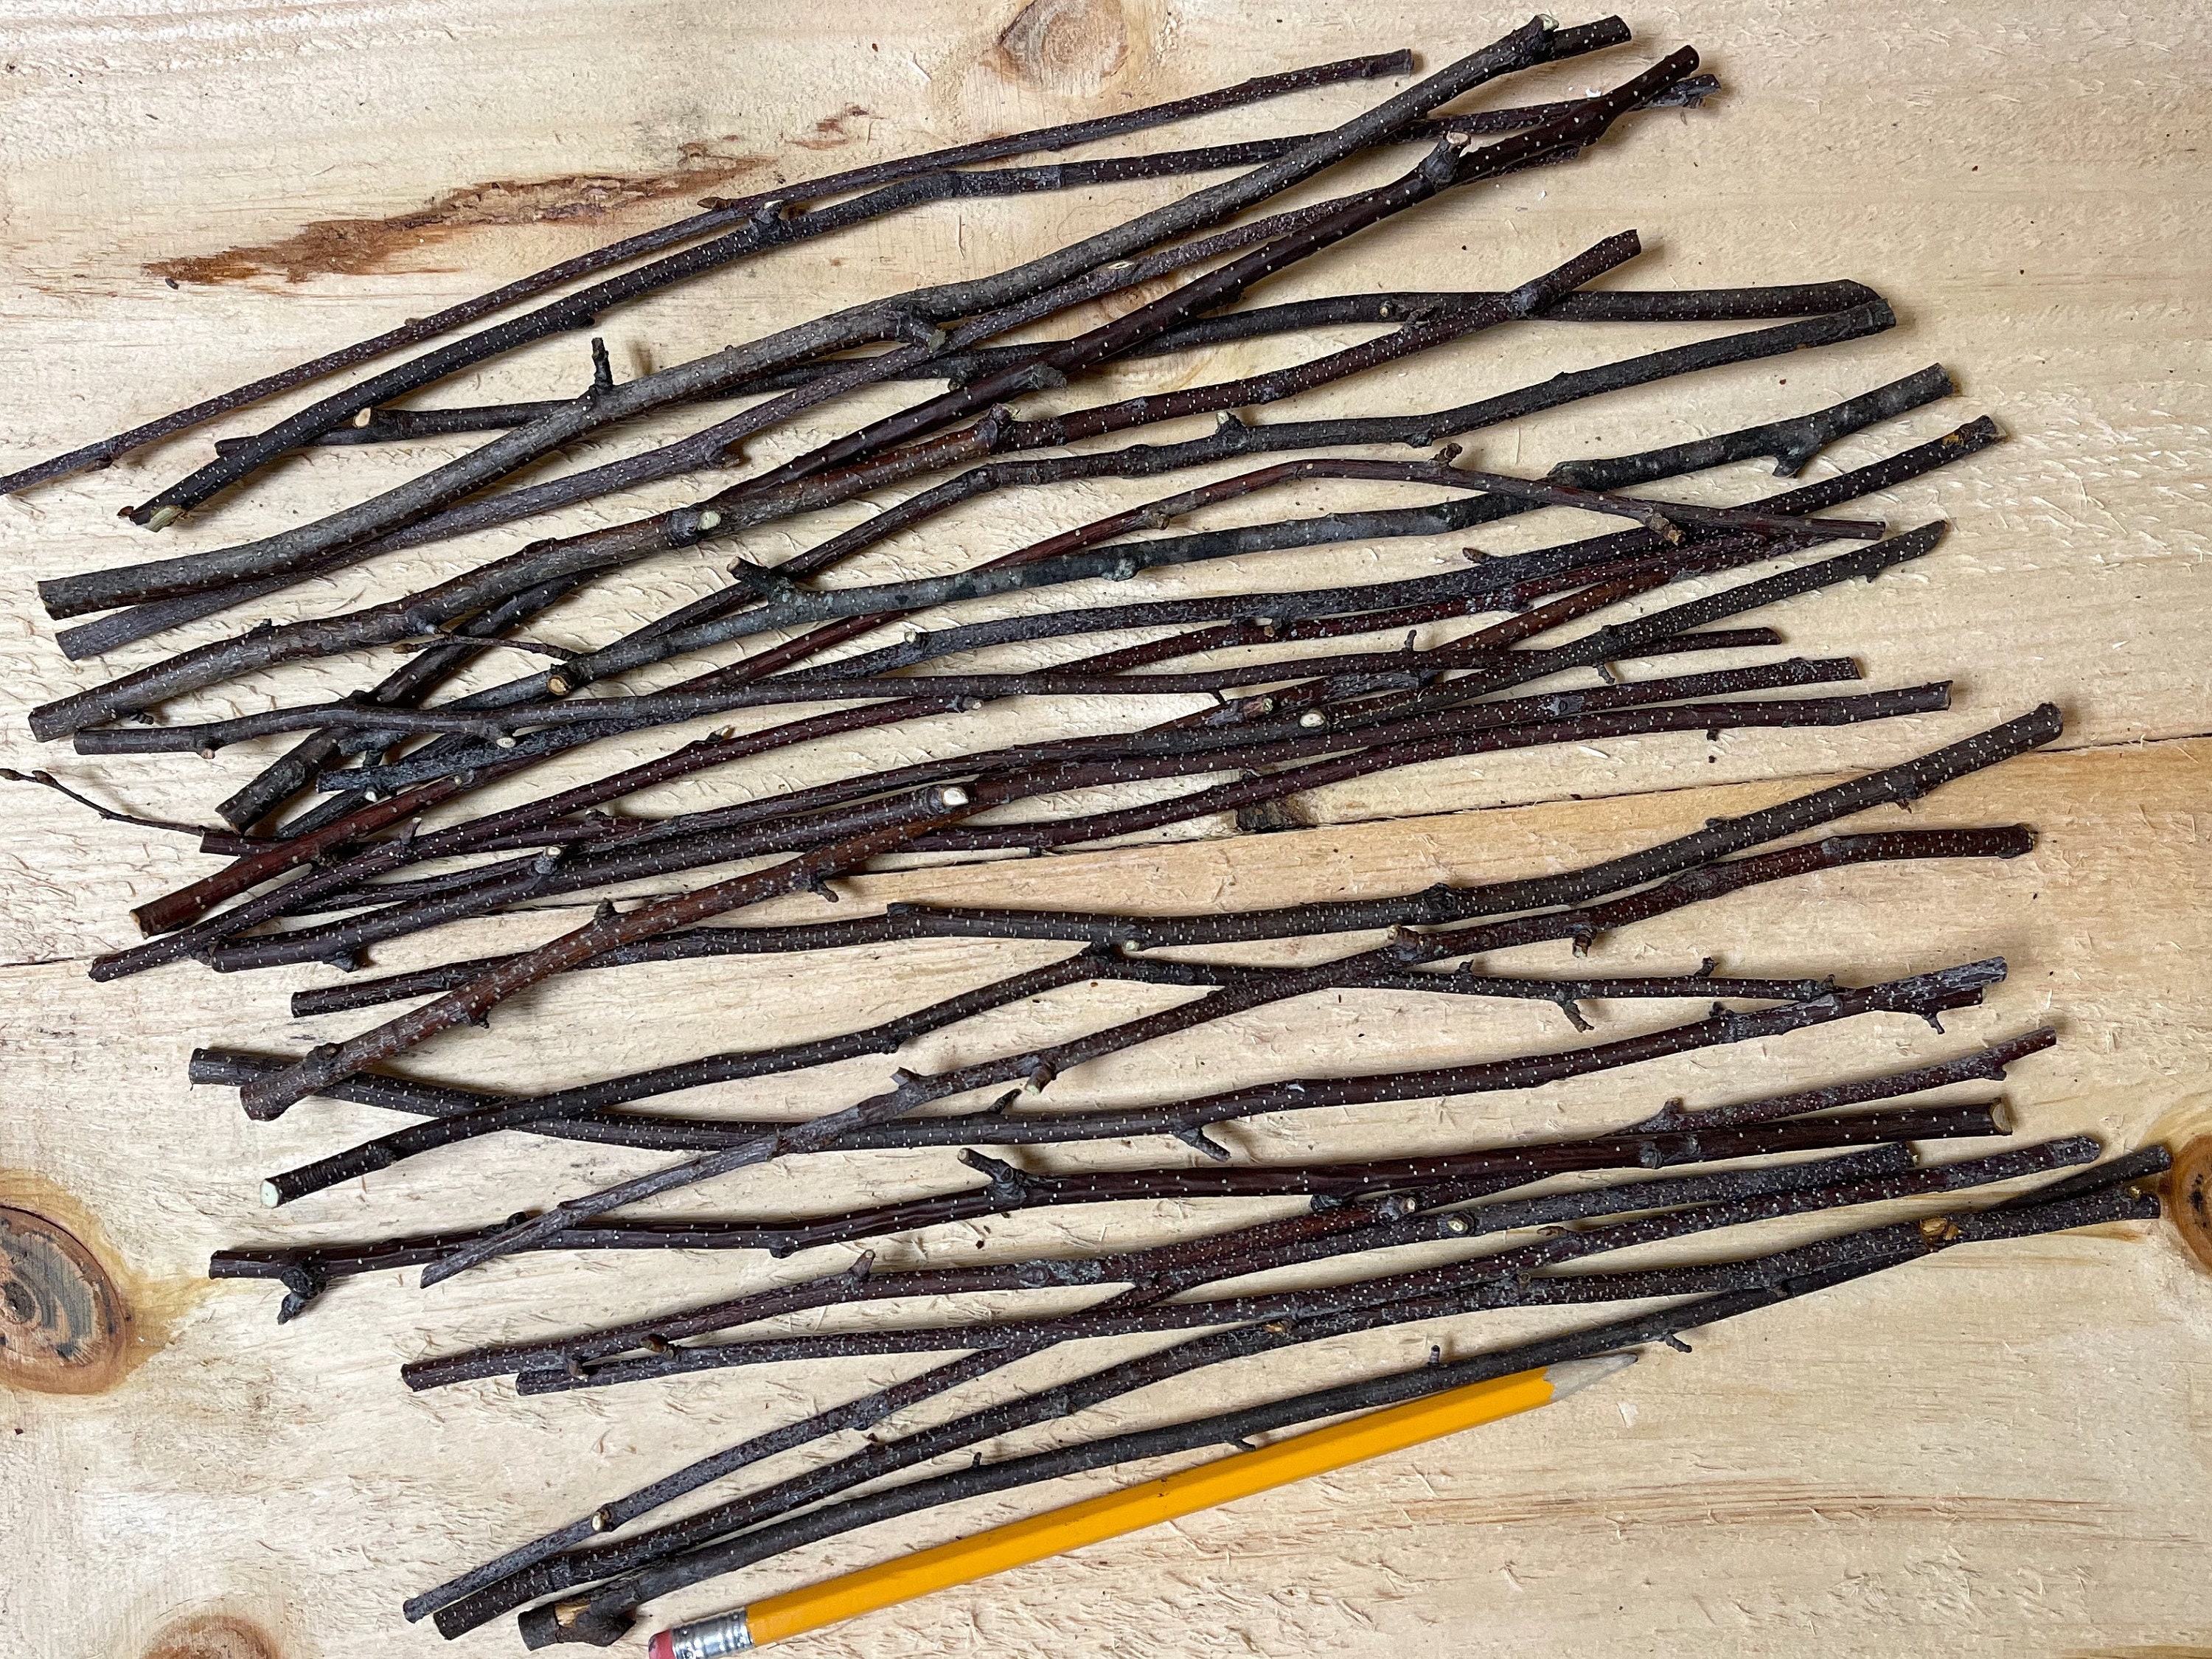 50 Small Birch Wood Sticks, Birch Sticks 